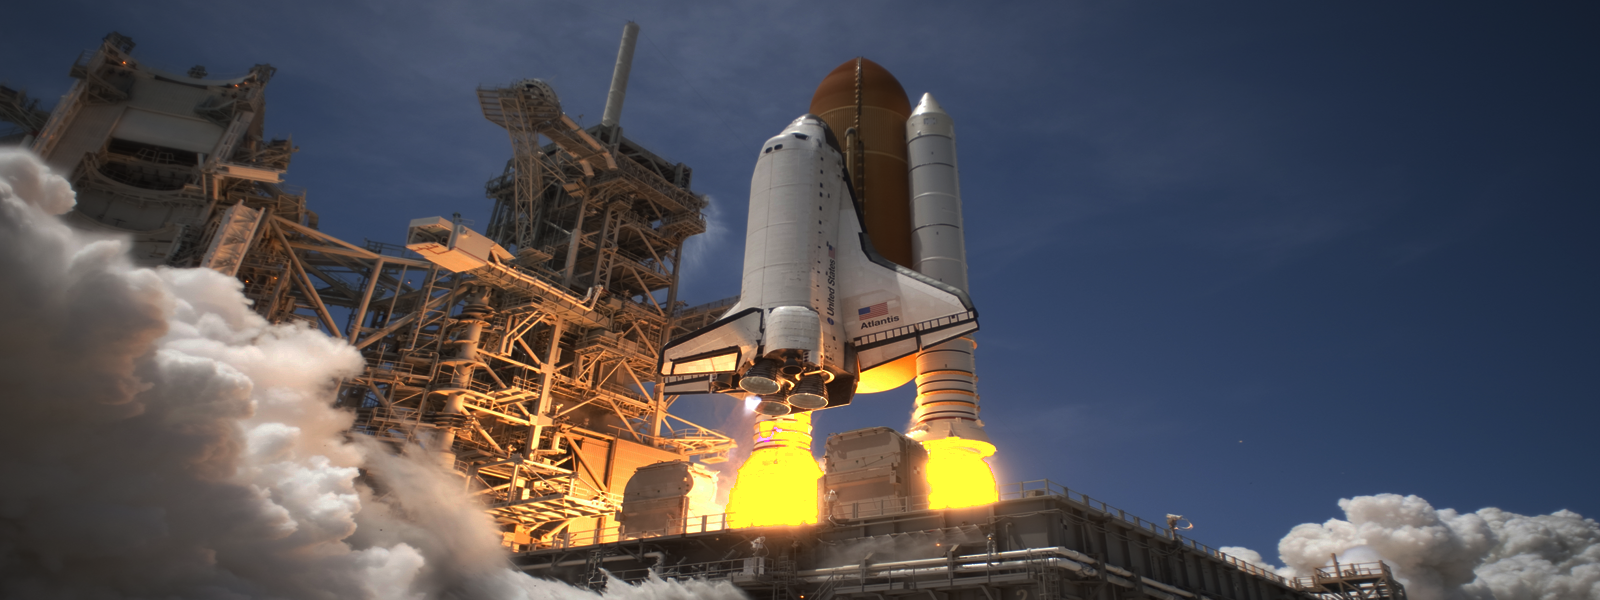 Space Shuttle!